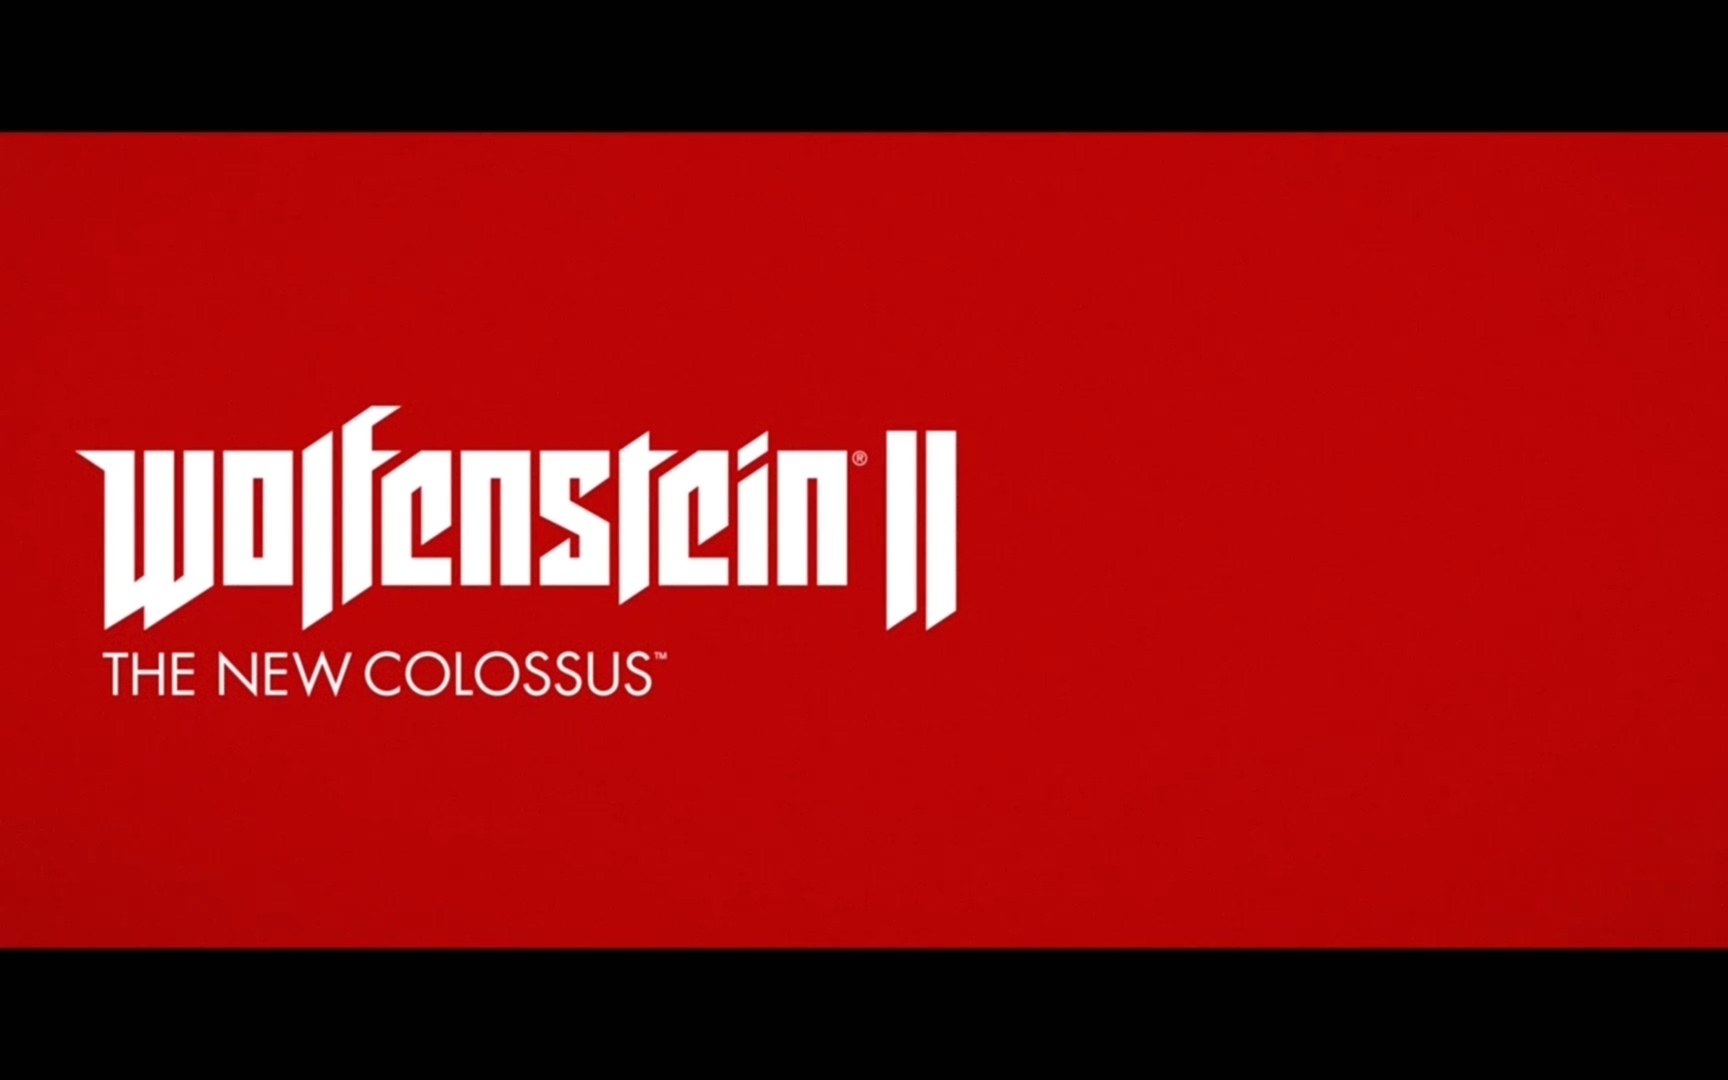 【bethesda】wolfenstein ii: the new colossus full reveal trailer